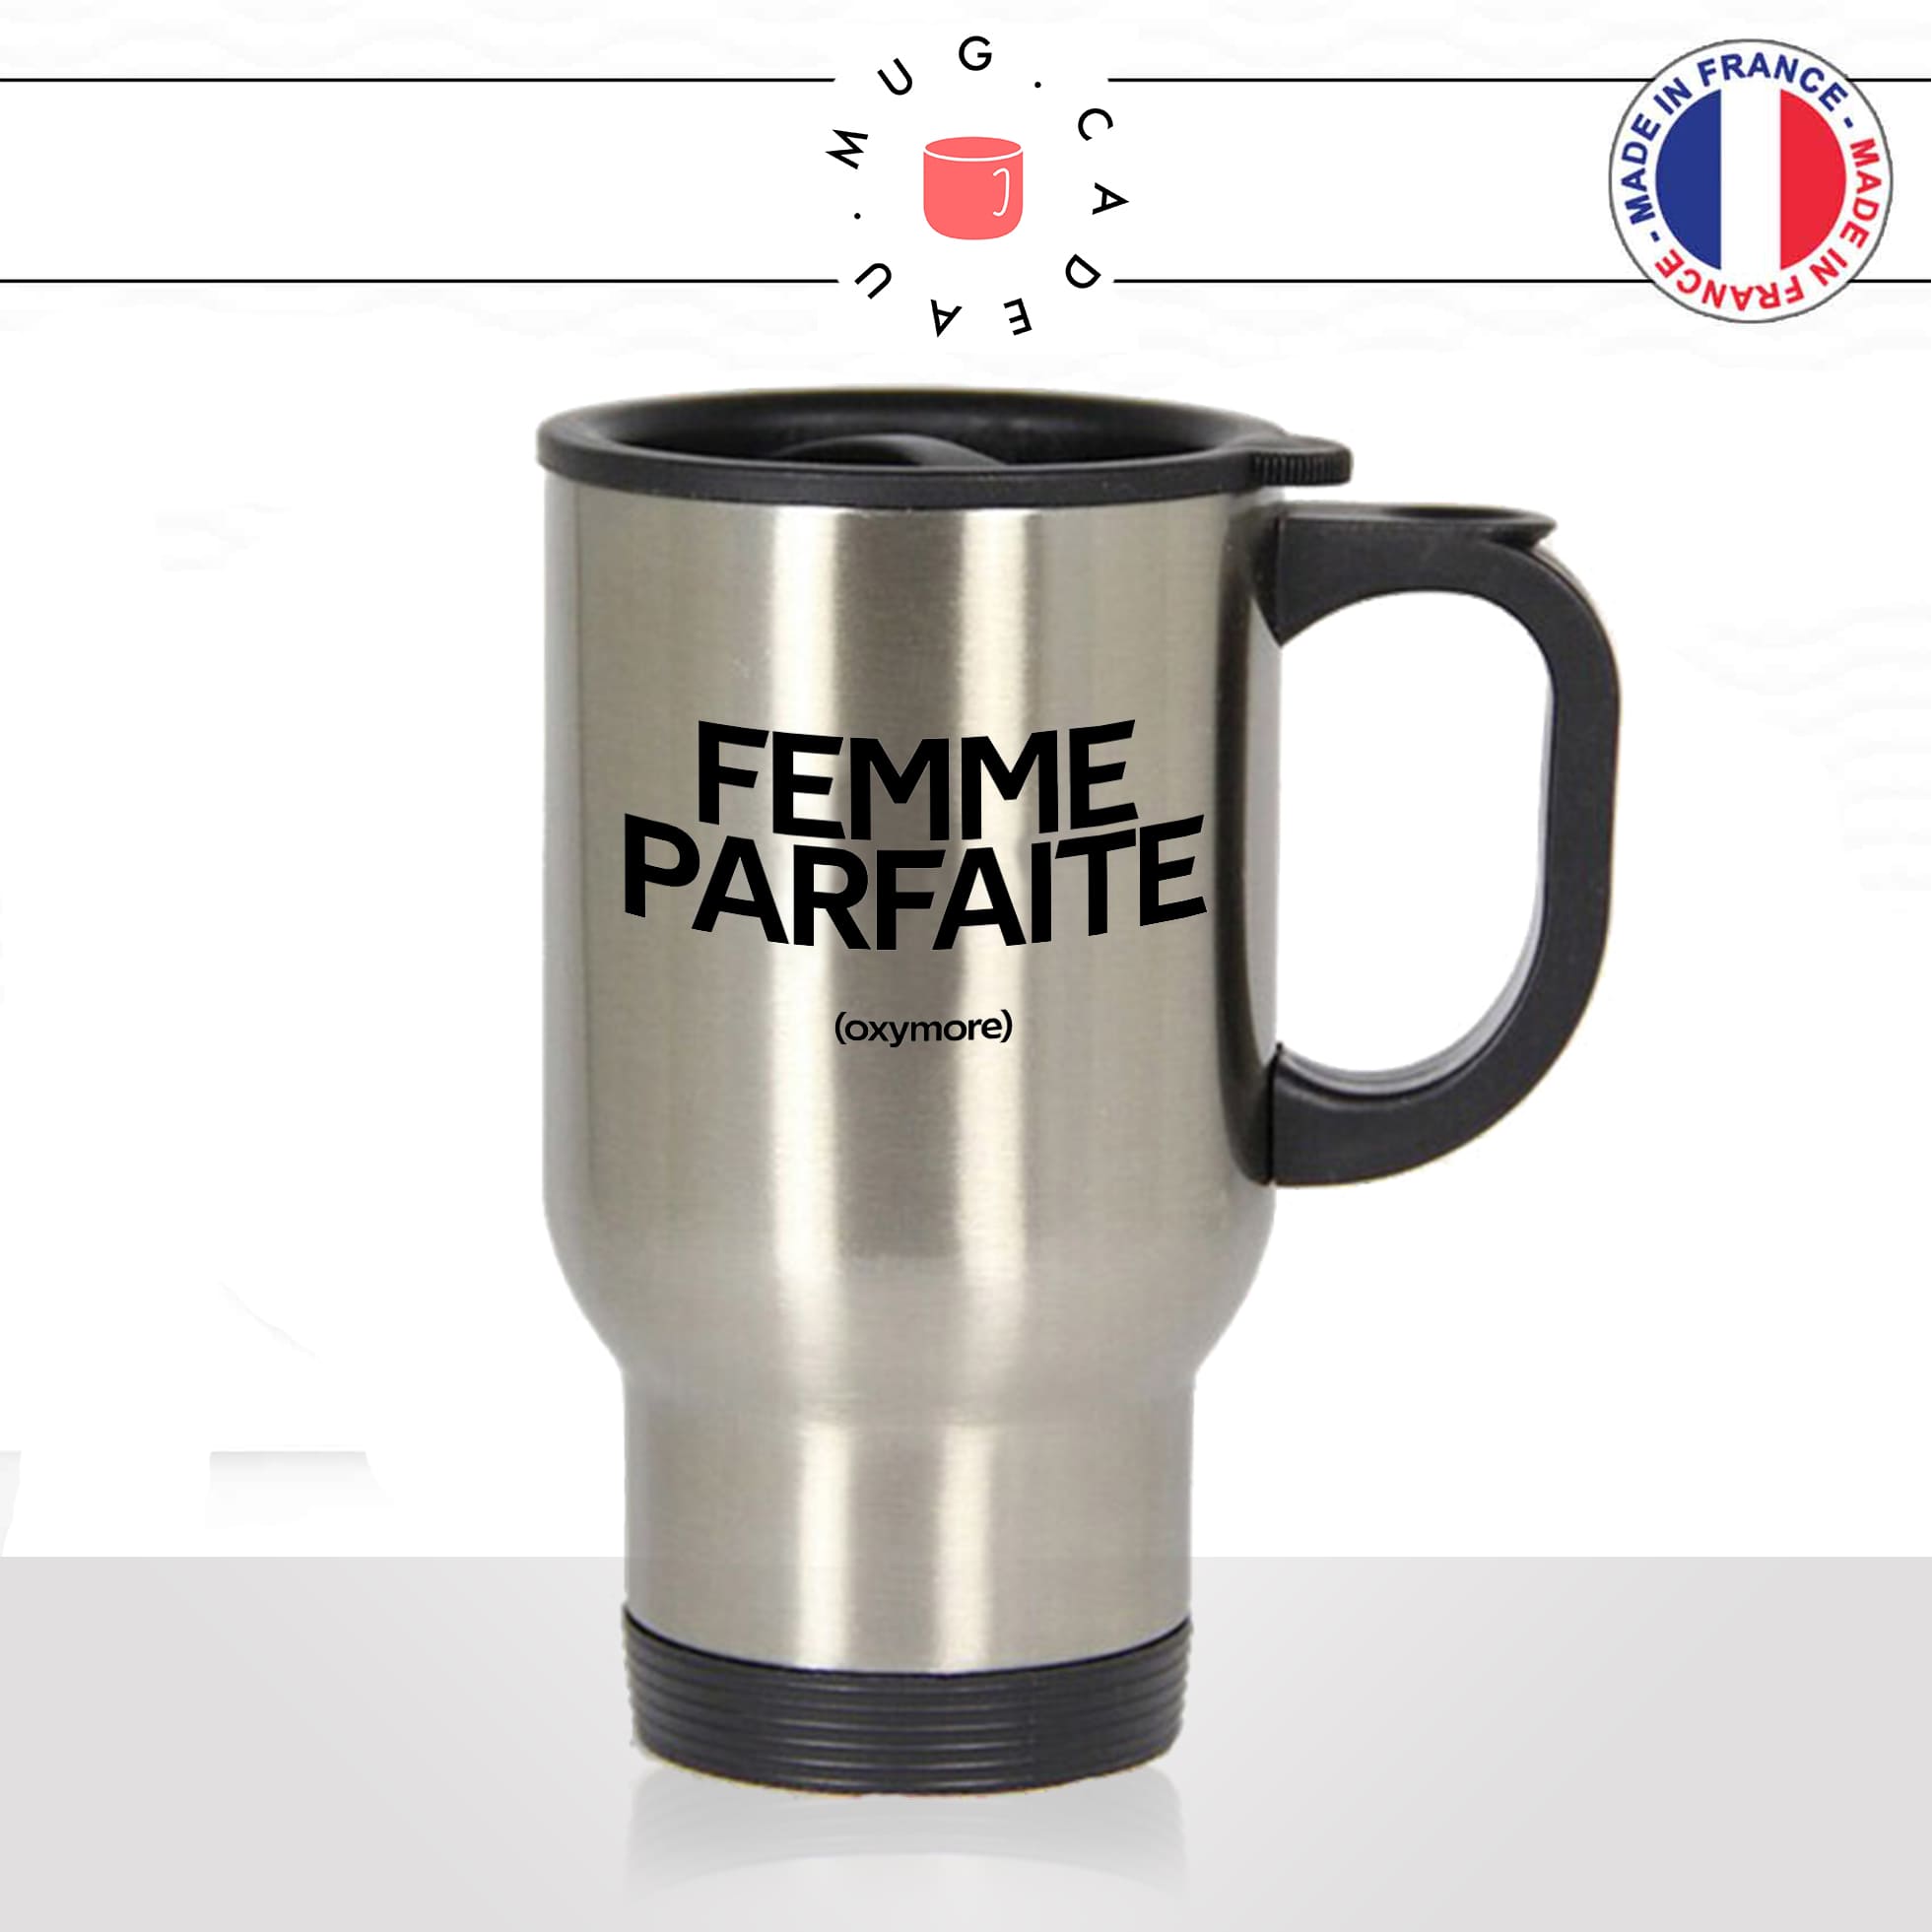 mug-tasse-thermos-isotherme-voyage-femme-parfaite-oxymore-couple-nexiste-pas-synonymes-copine-humour-fun-idée-cadeau-originale-cool2